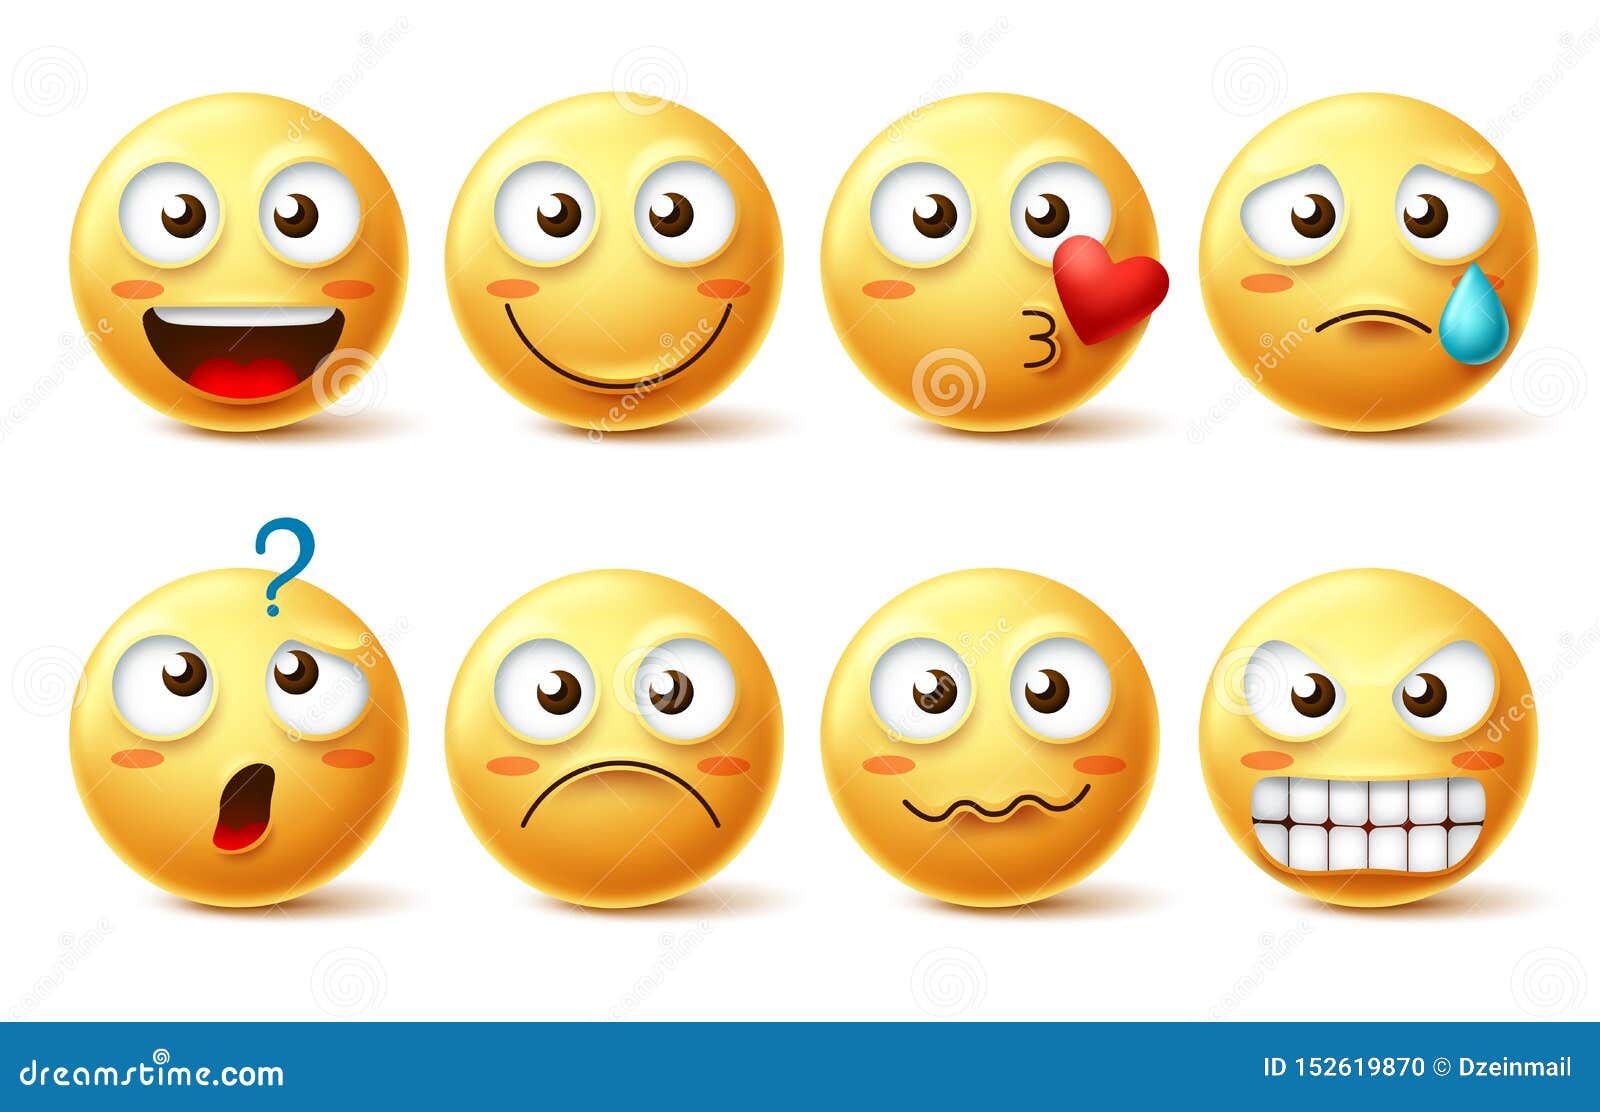 Character Expression Meme Emoji